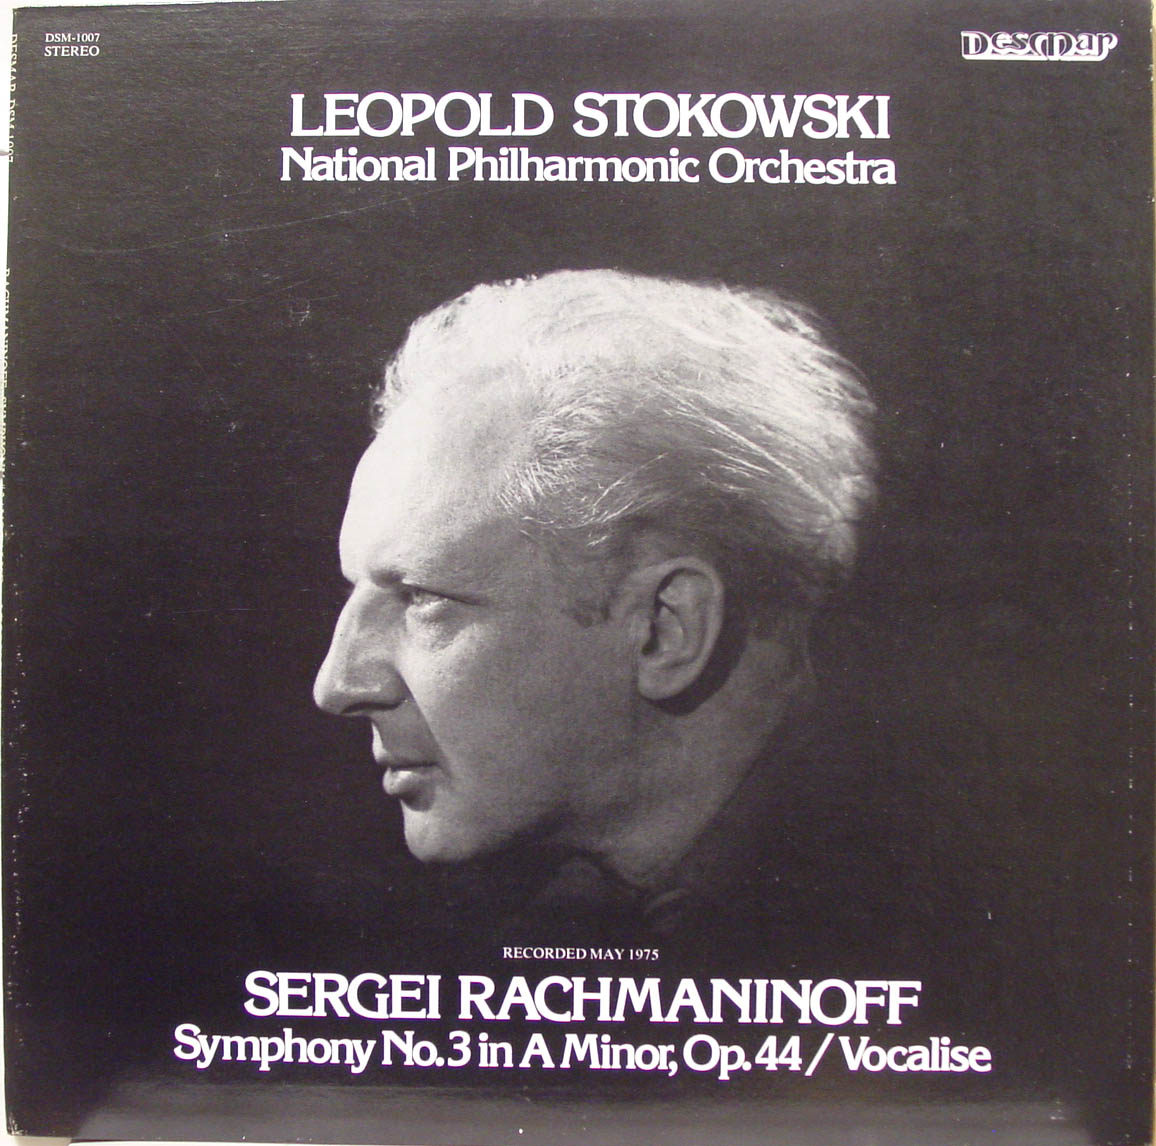 Sergei Rachmaninoff Symphony No. 3